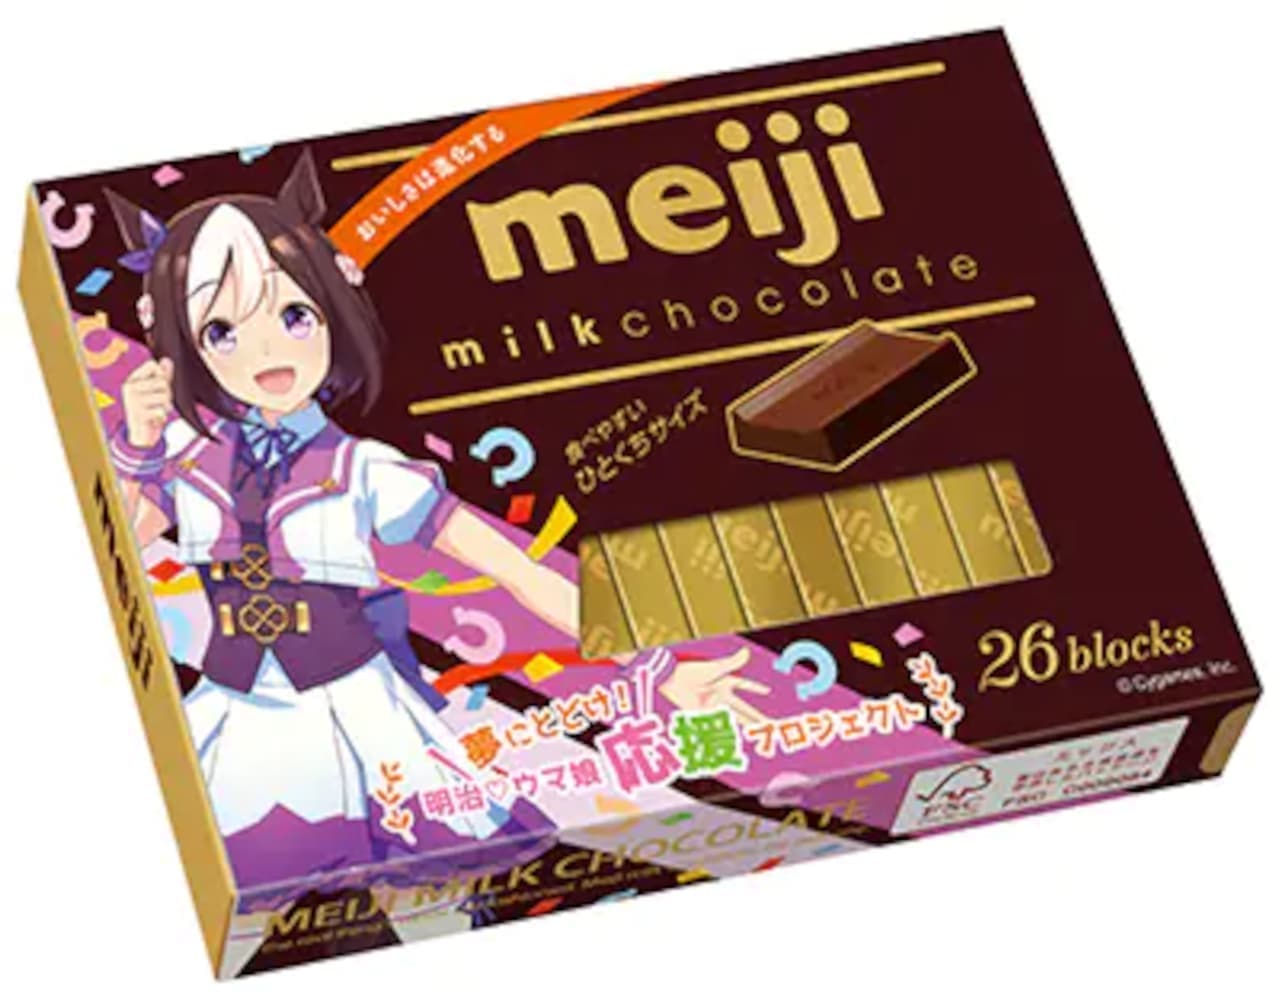 Meiji x Uma Musume collaboration chocolate